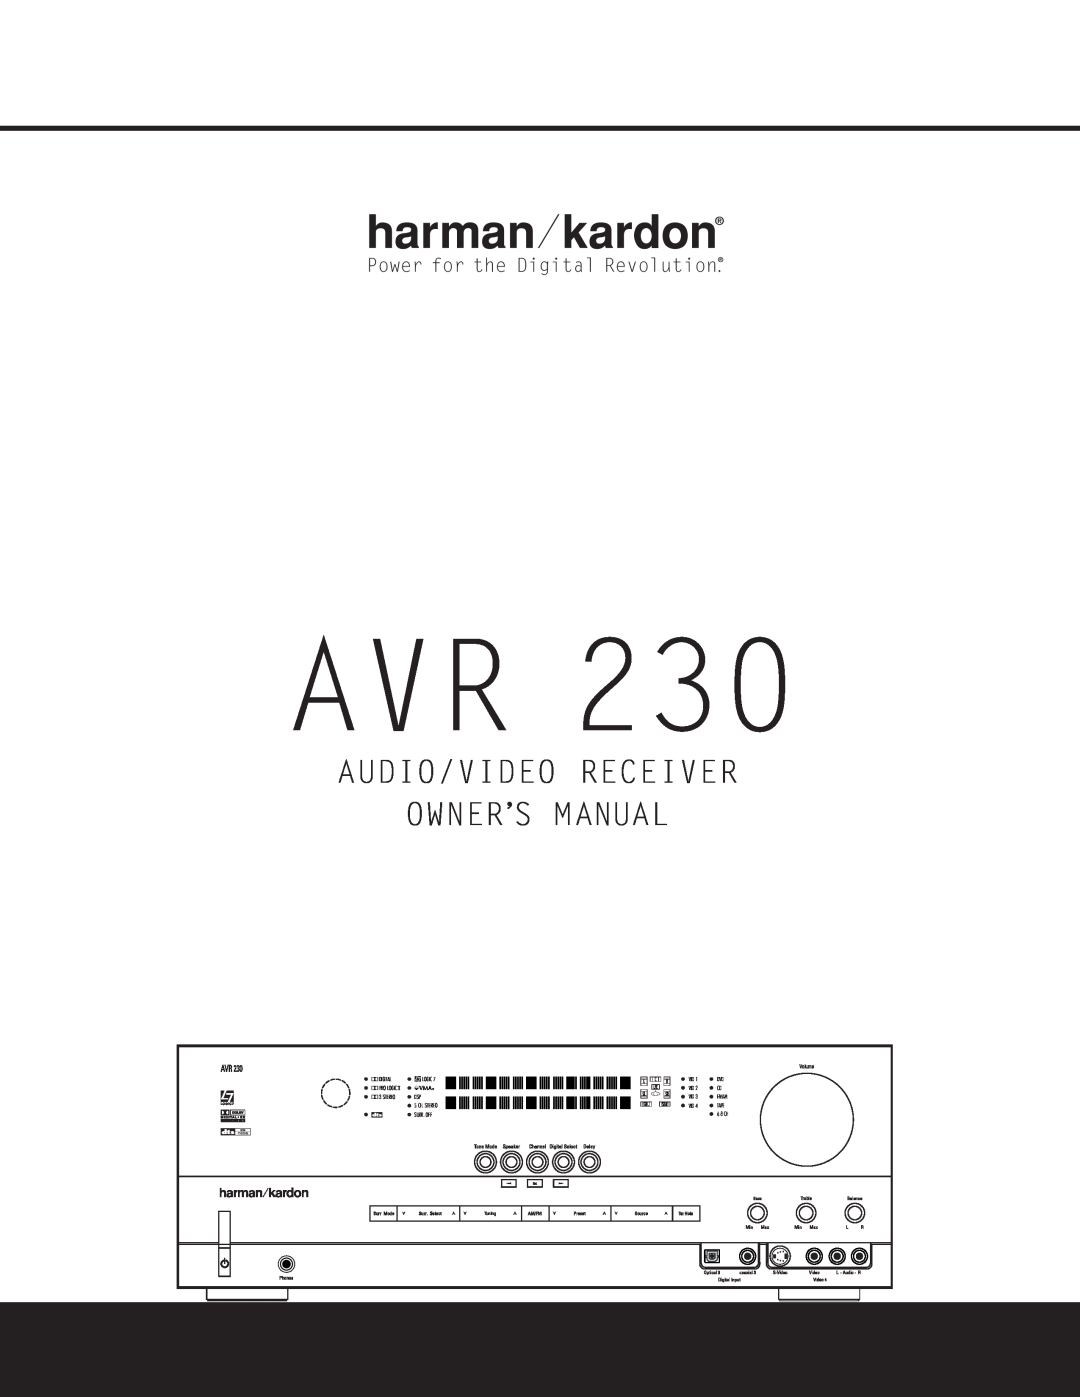 Harman-Kardon AVR 230 owner manual Audio/Video Receiver Owner’S Manual, Power for the Digital Revolution, Pro Logic 